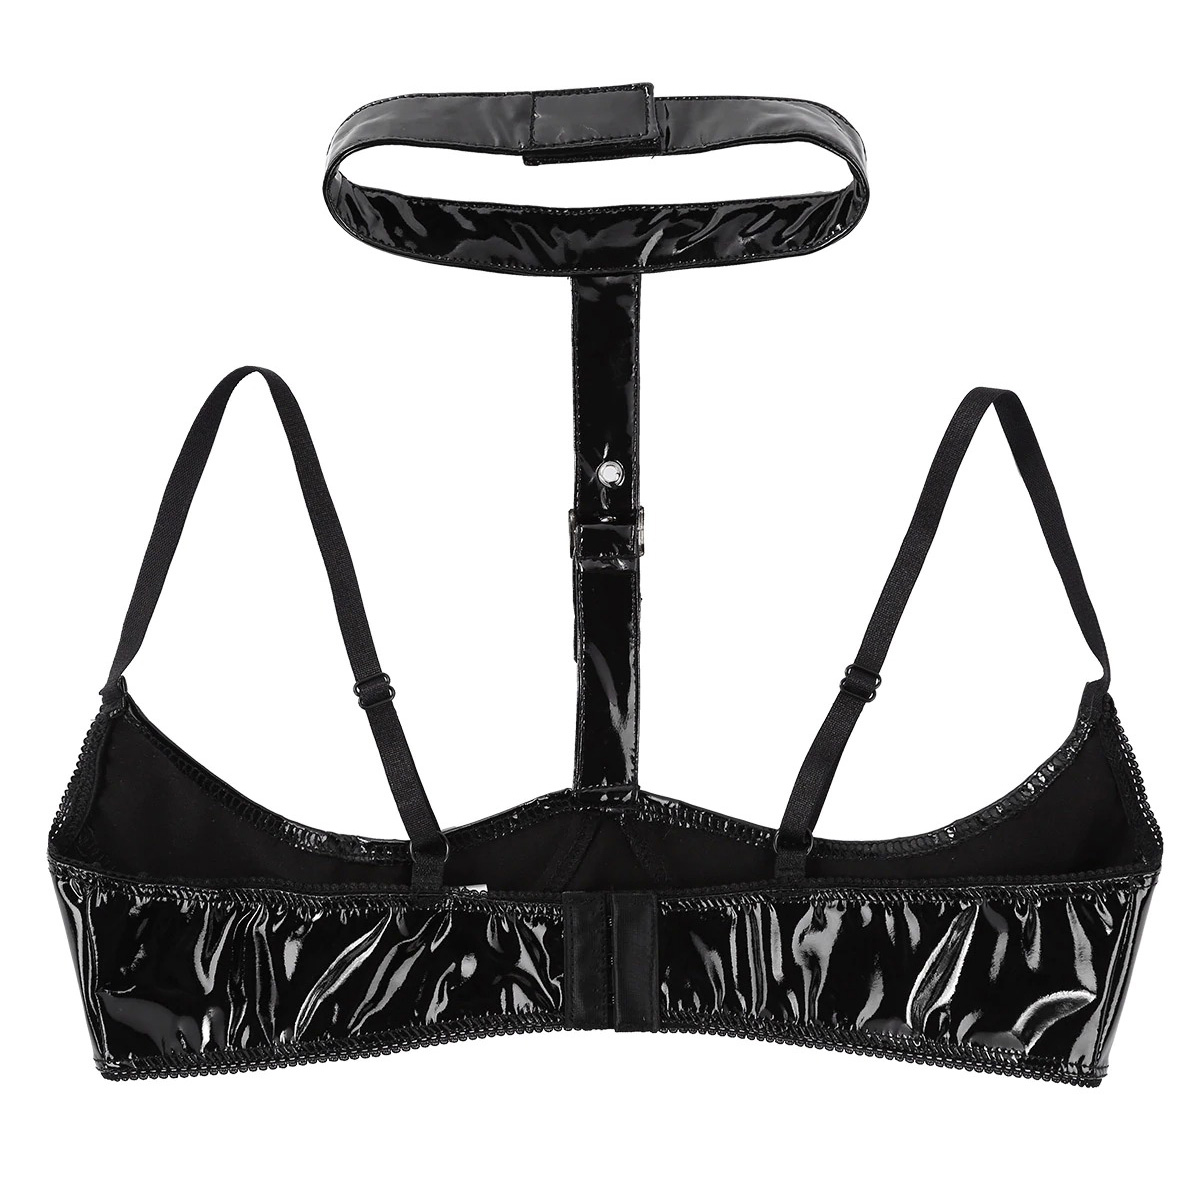 Women's Wire-Free Shelf Bra Top / Patent Leather Lingerie / Wetlook Open-Cup Bra With Halter Neck - EVE's SECRETS